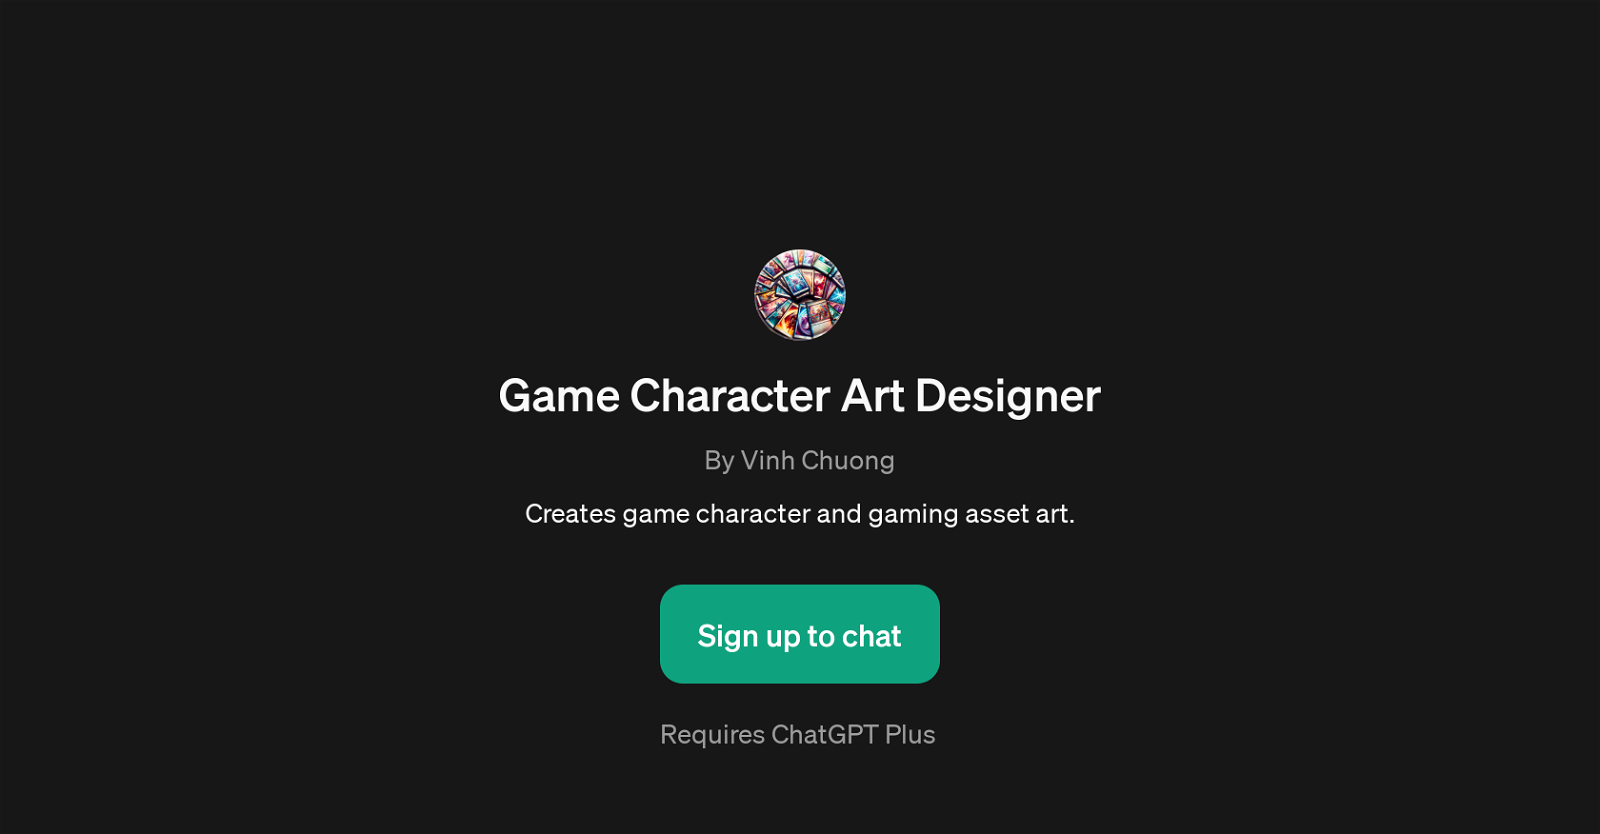 Game Character Art Designer website